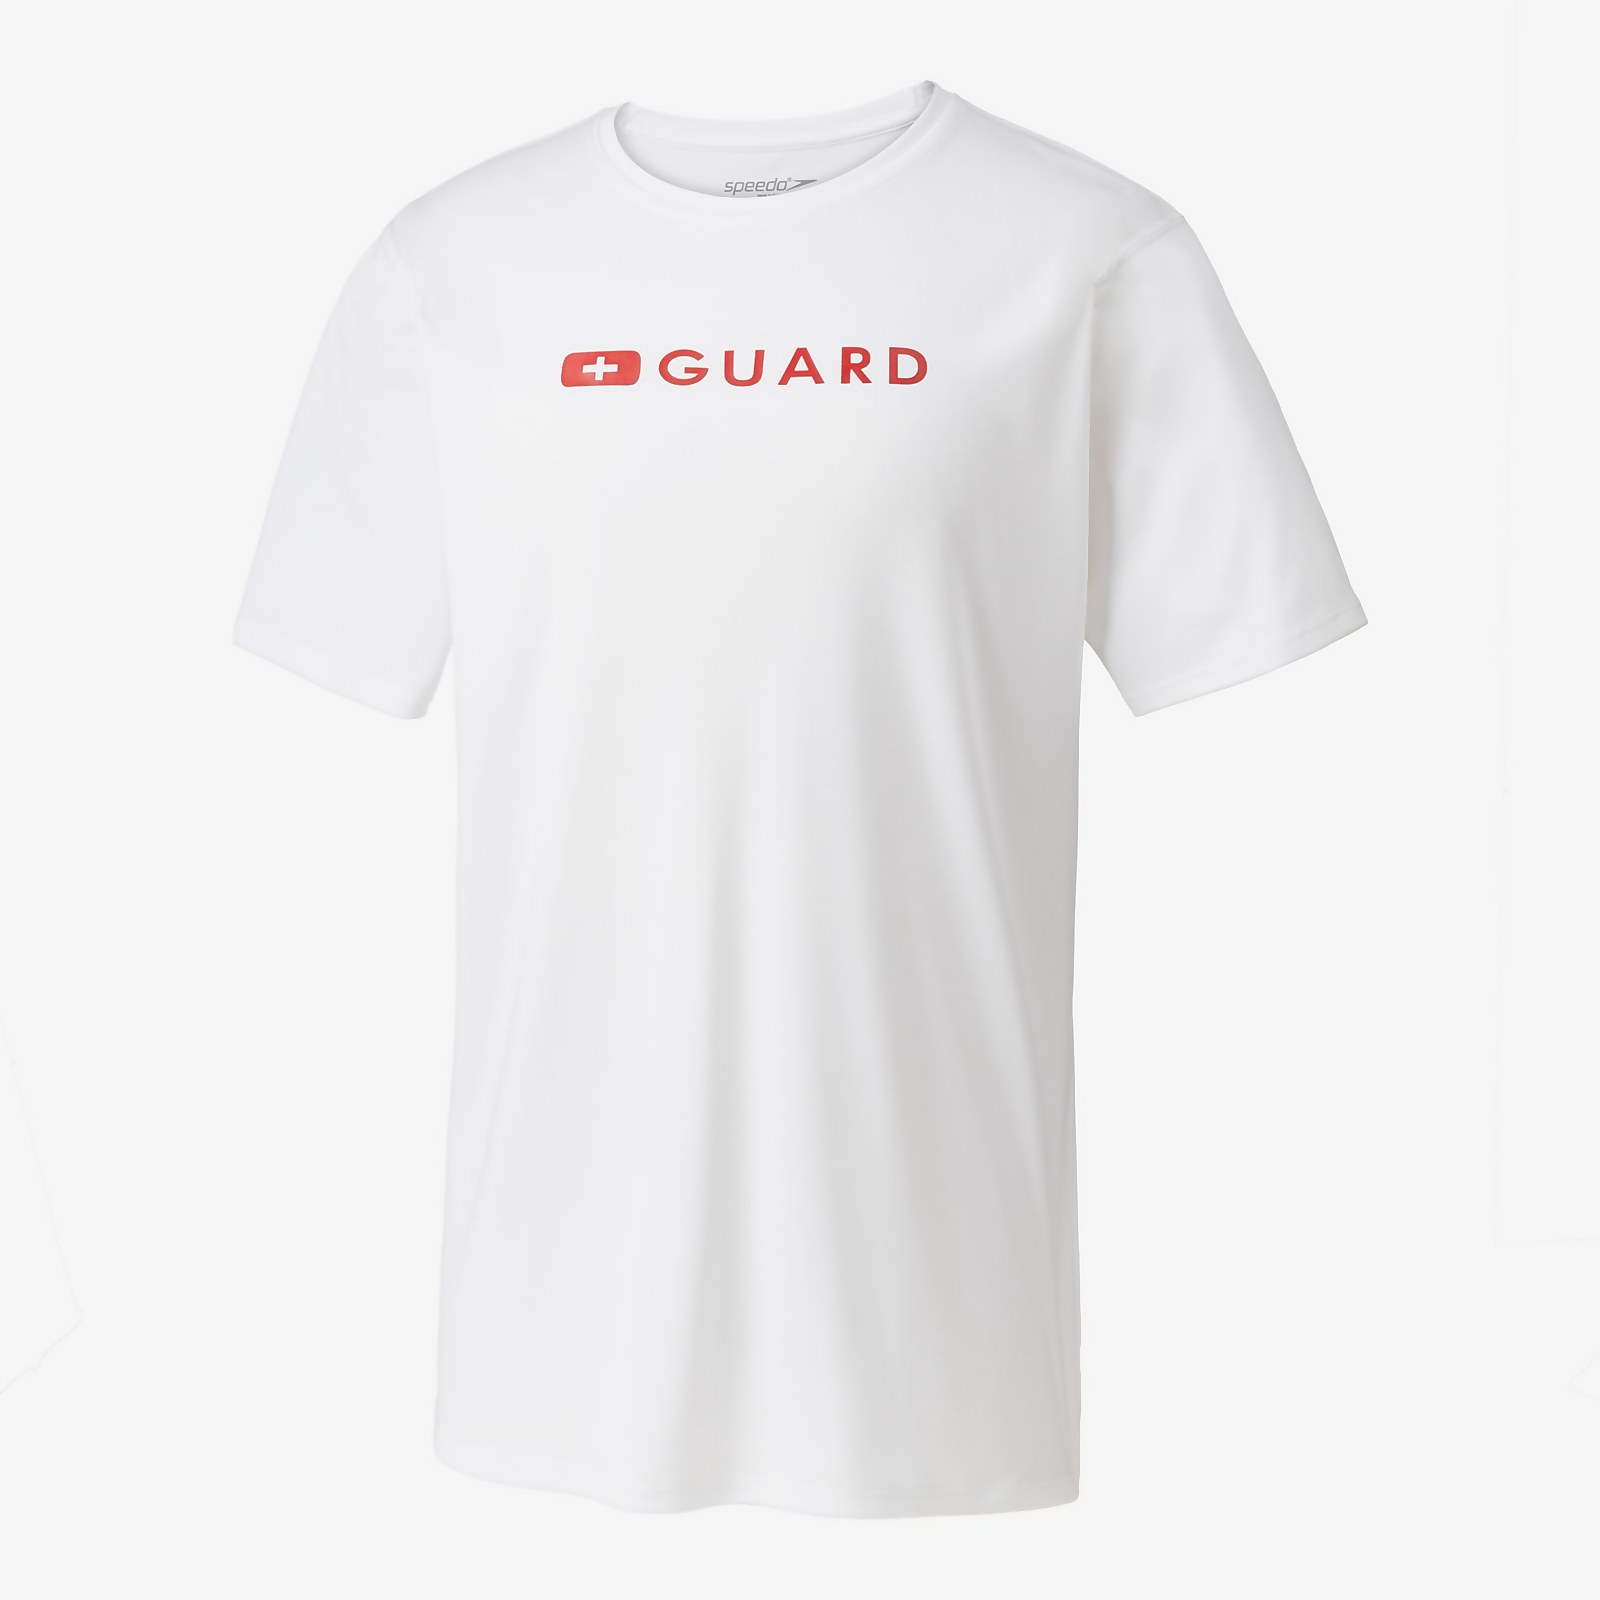 Speedo  Guard New Easy Short Sleeve Tee - L    : White